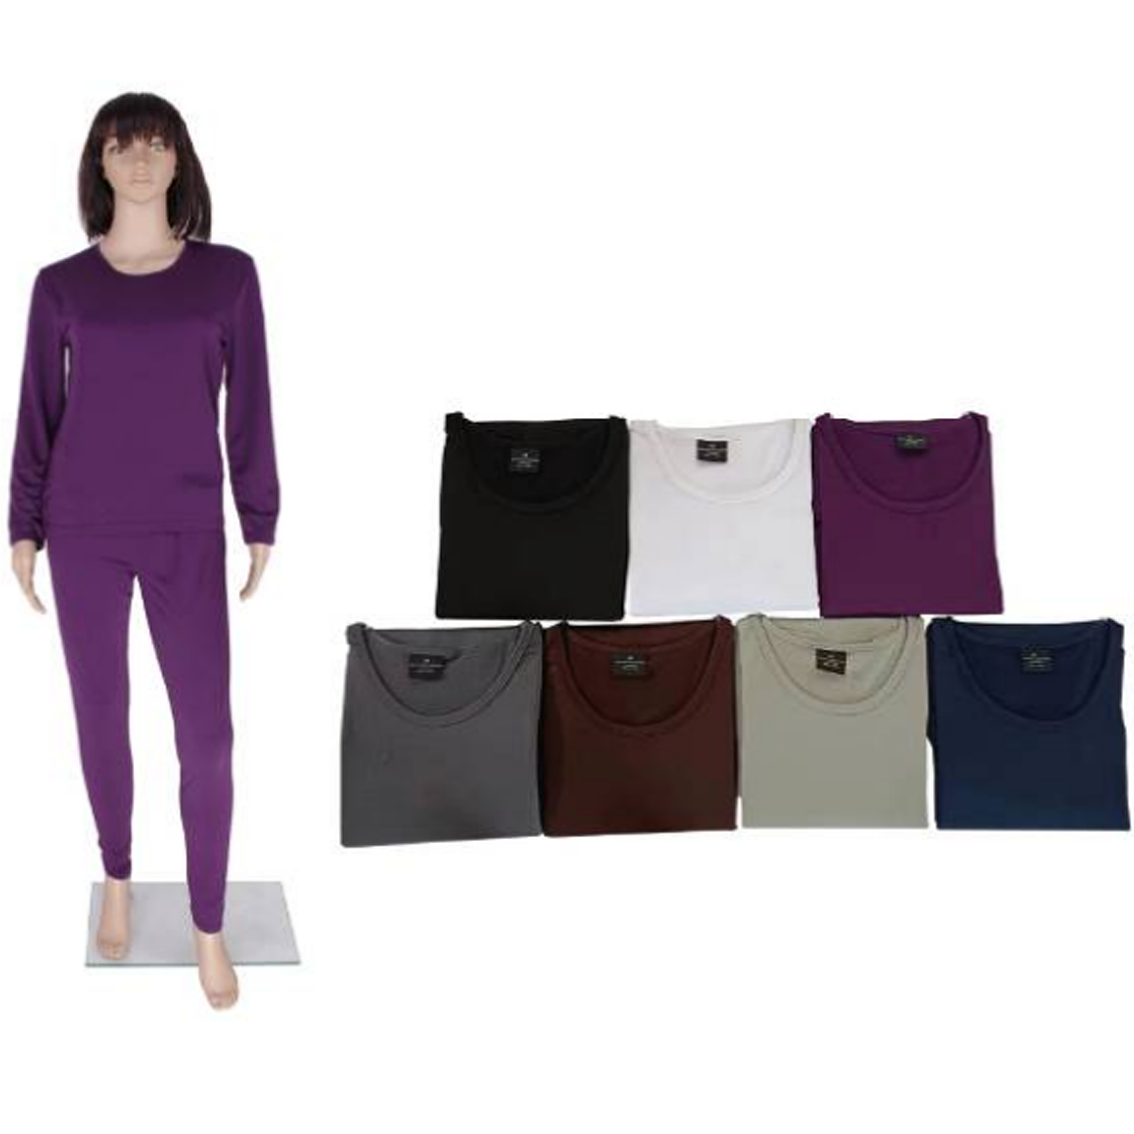 Wholesale Women's Clothing Apparel Thermal Set Janna NQ8B